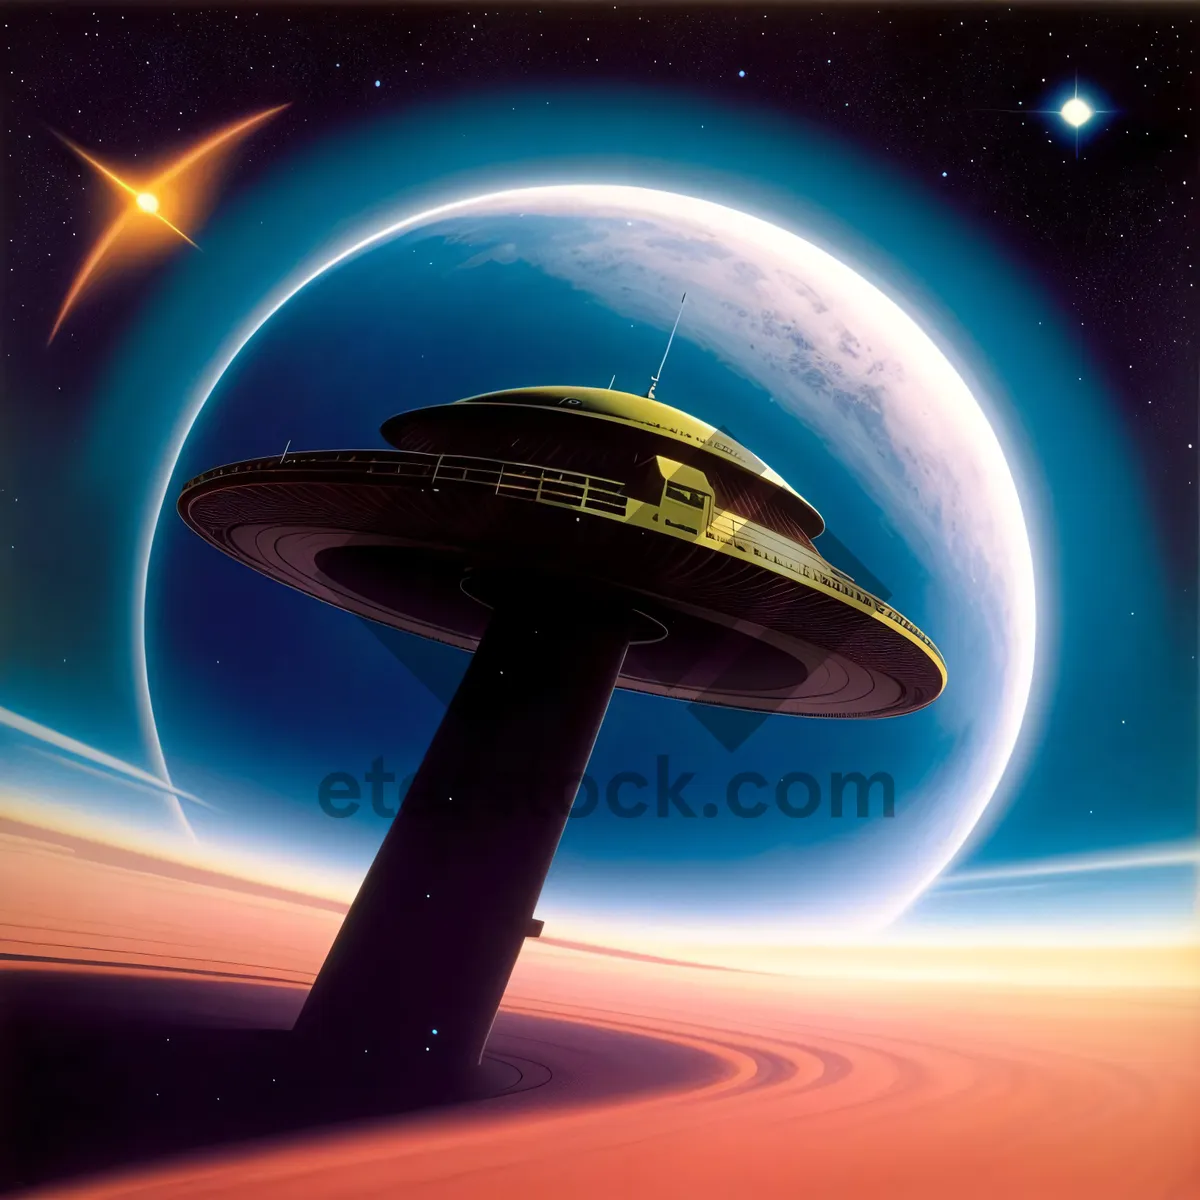 Picture of Digital Space Fantasy: Moonlit Celestial Planet